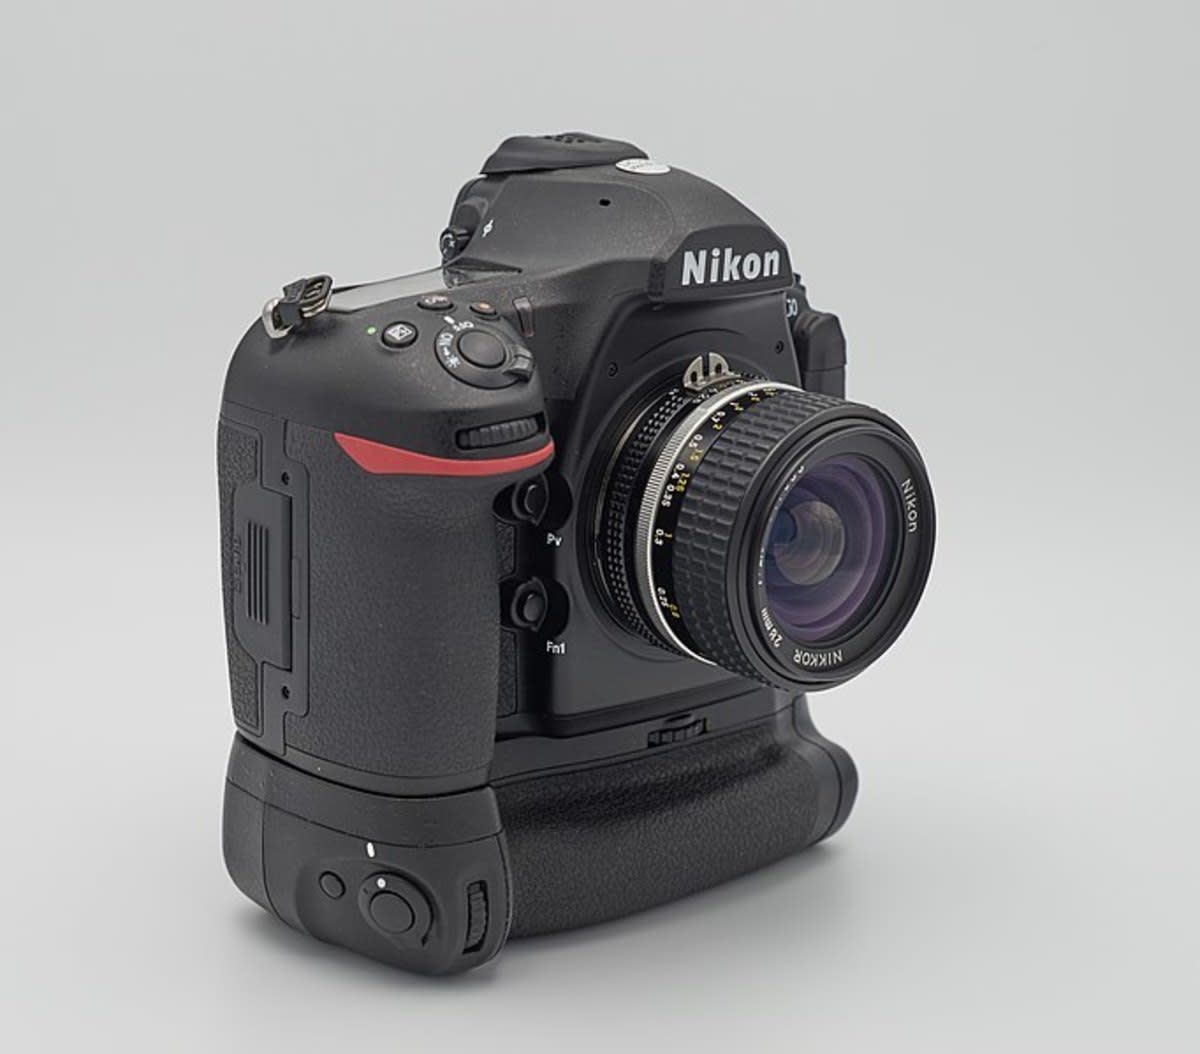 Detailed Review of the Nikon D850 Full Frame Dslr Camera